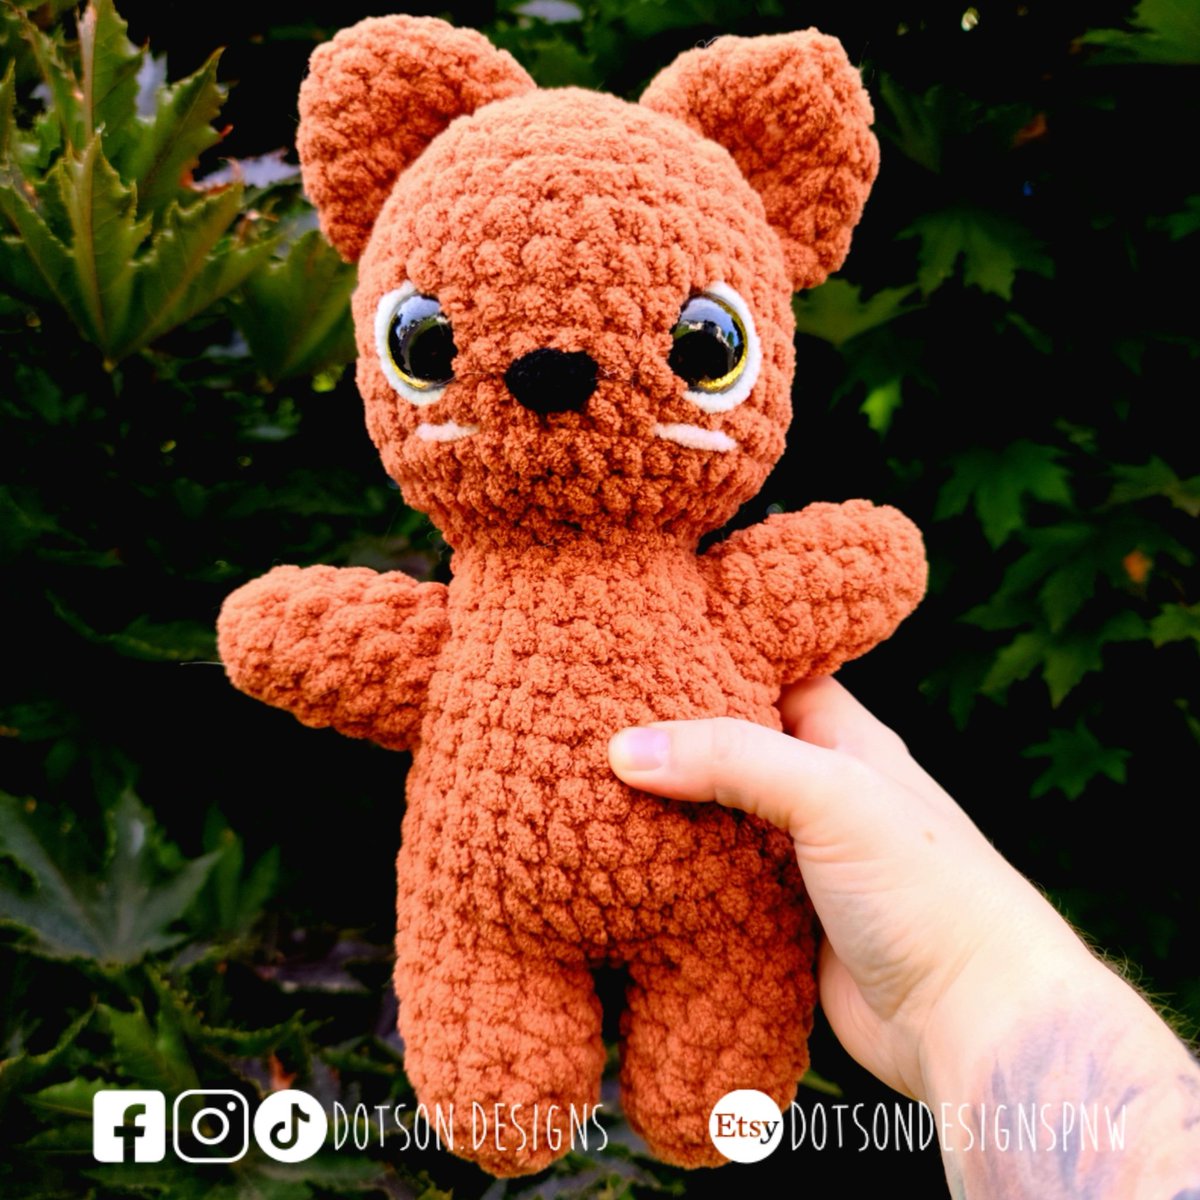 Big teddy bear ❤️🐻

#amigurumiplush #amigurumi #crochet #crochetaddict #crochetlove #bear #teddybear #freeamigurumipatterns #handmade #crochetpattern #yarn #bernetblanketyarn